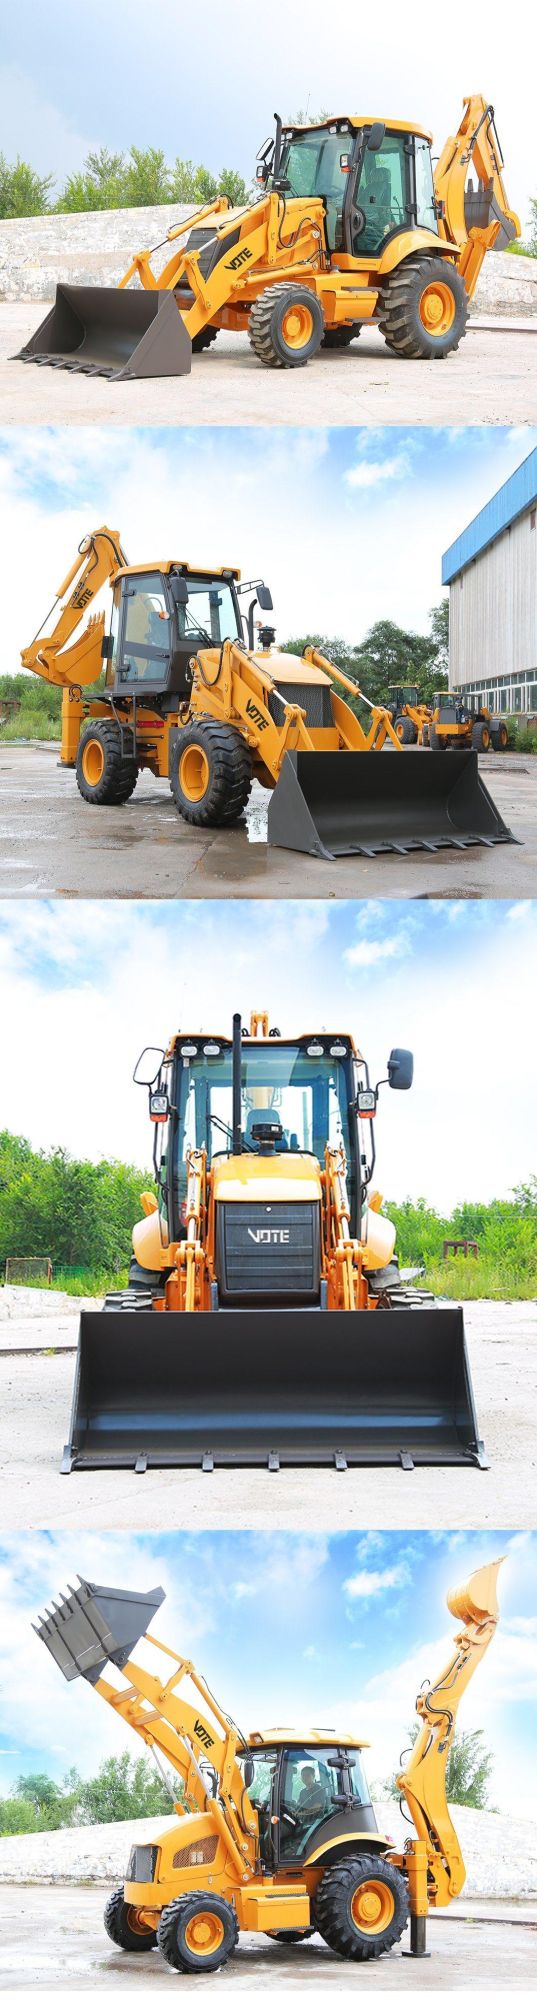 Construction Machinery Vtz-30-25 Backhoe Loader Excavator, 8200kg Operating Weight Backhoe Price